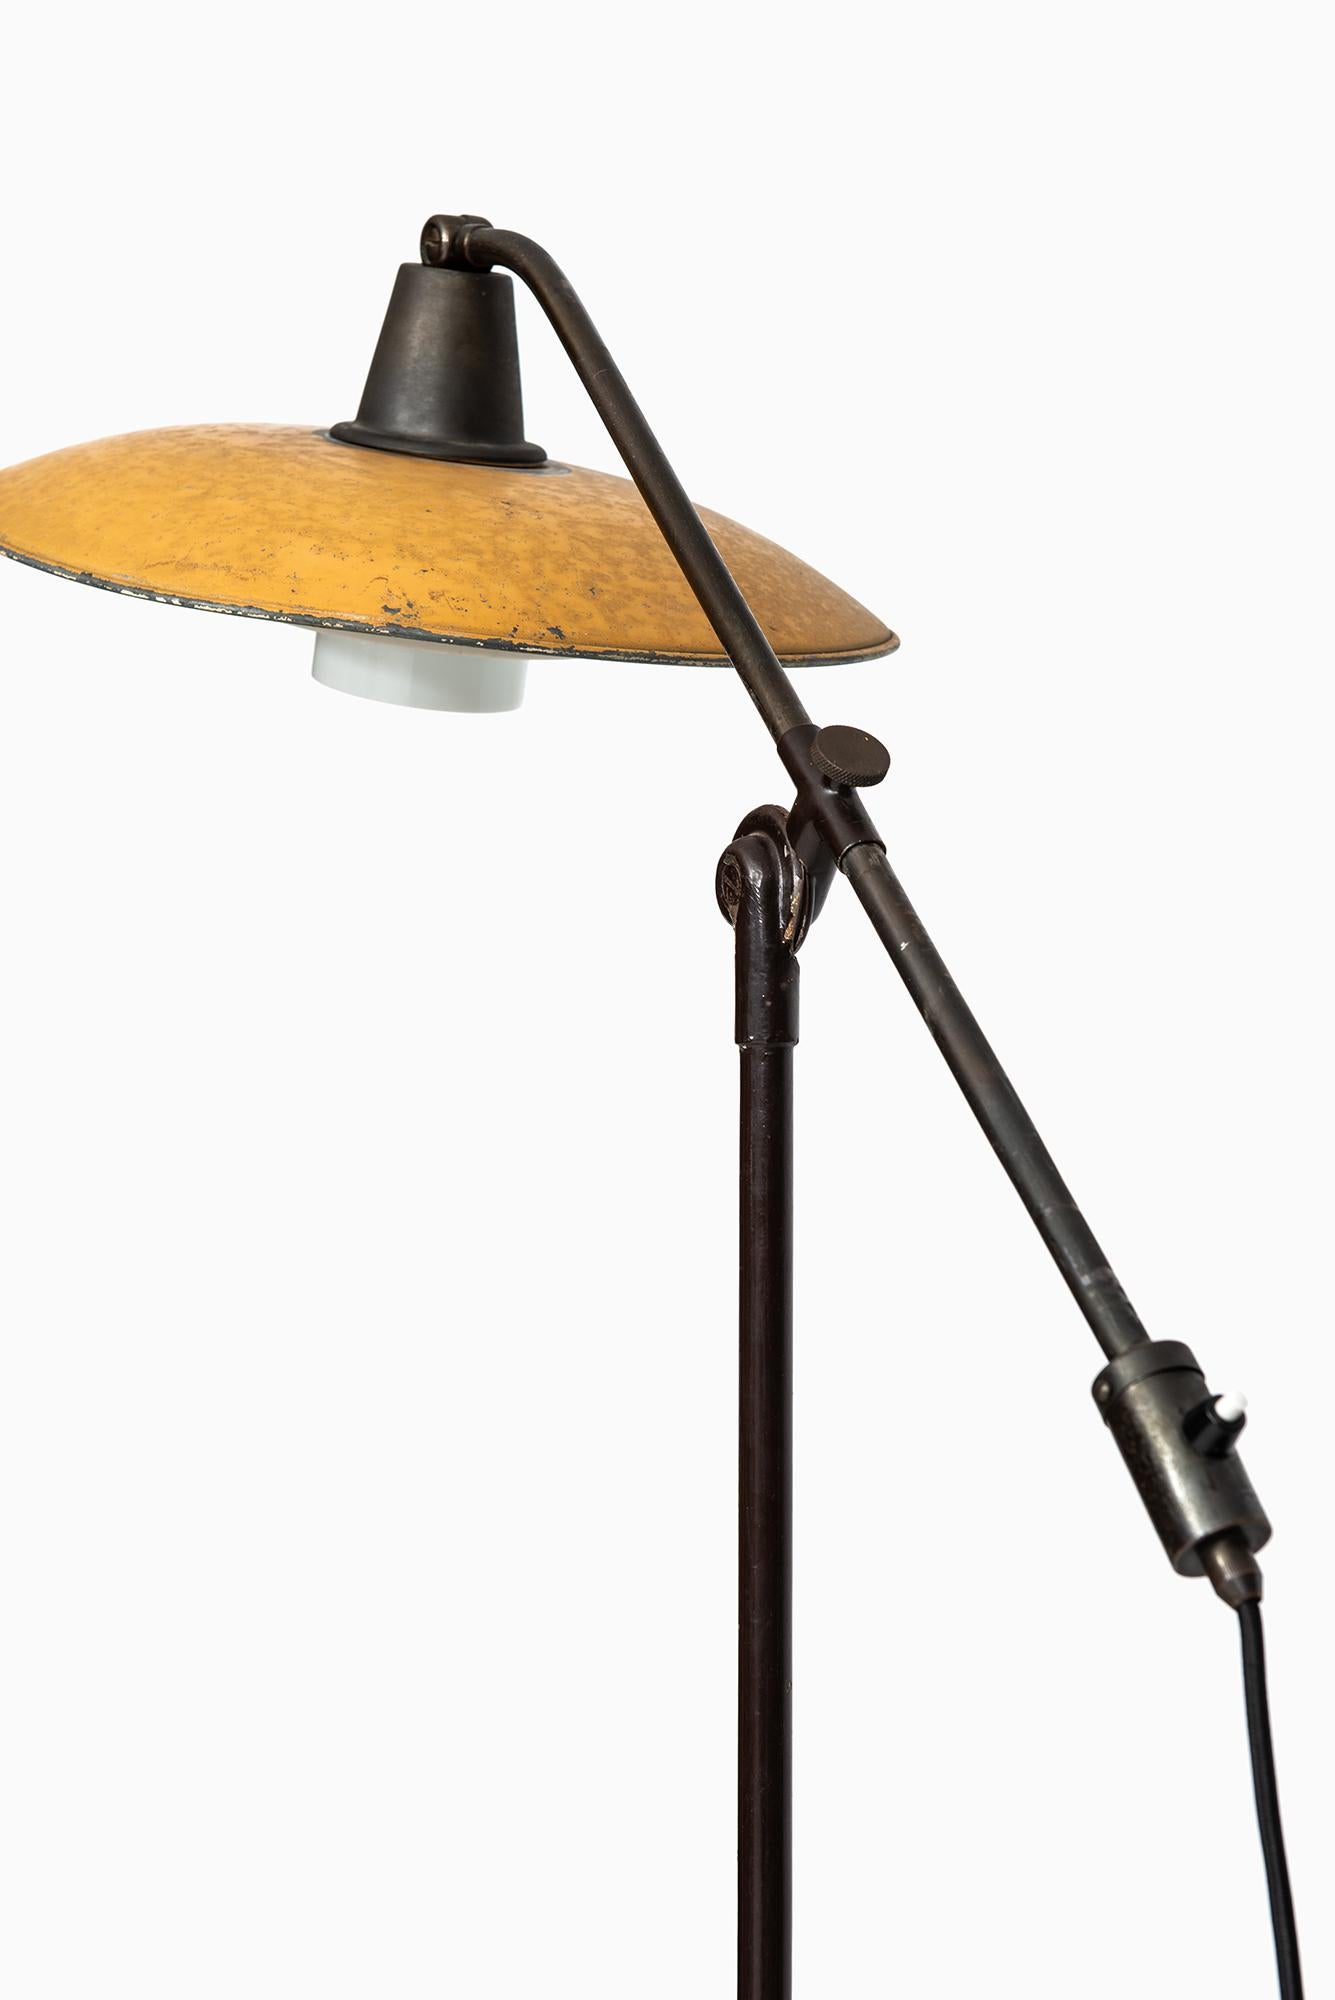 Danish Poul Henningsen Floor Lamp PH-2/2 'Water Pump' by Louis Poulsen in Denmark